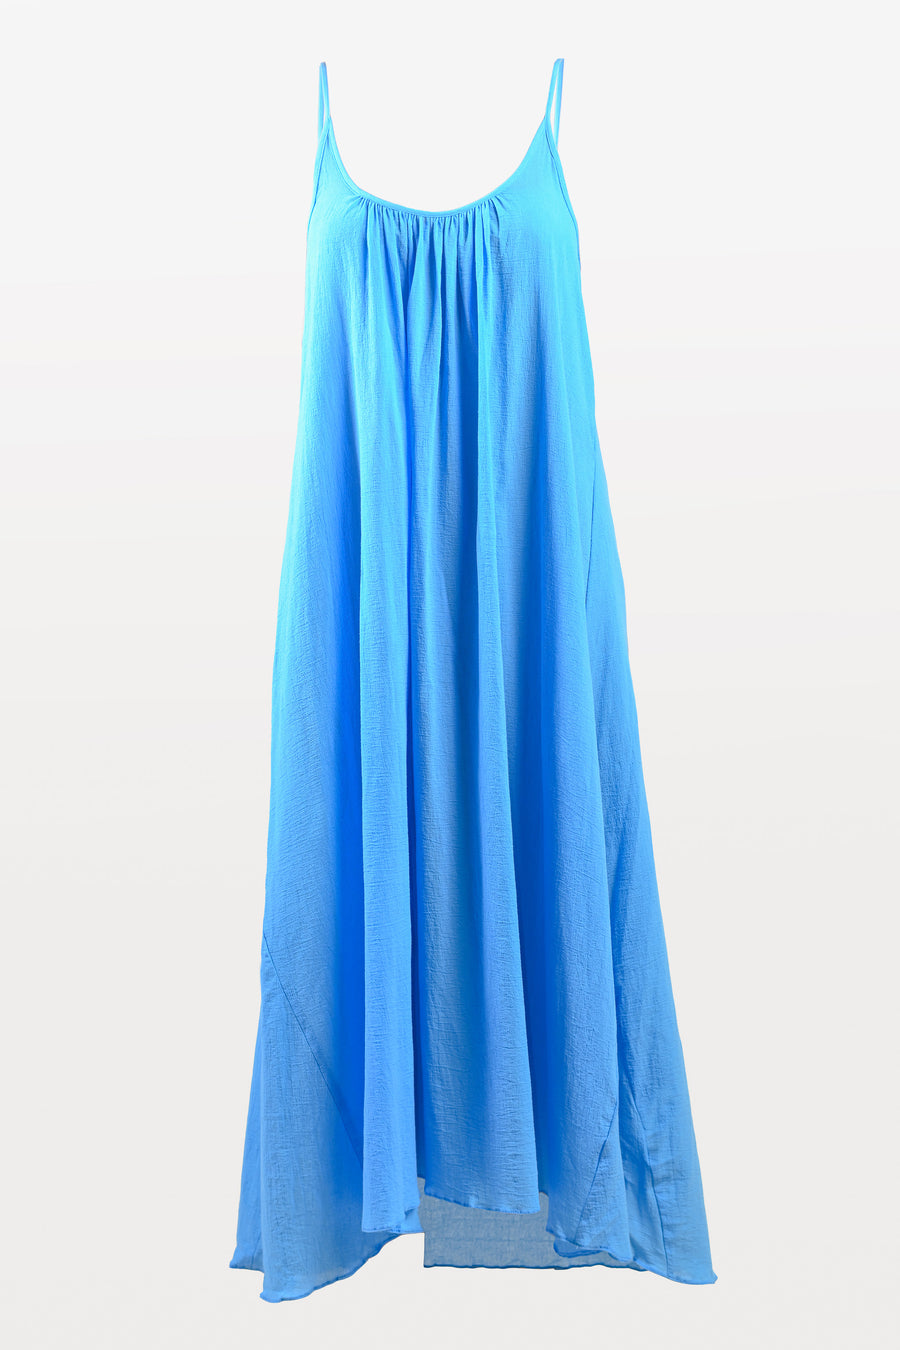 Malfi Dress - Capri Blue